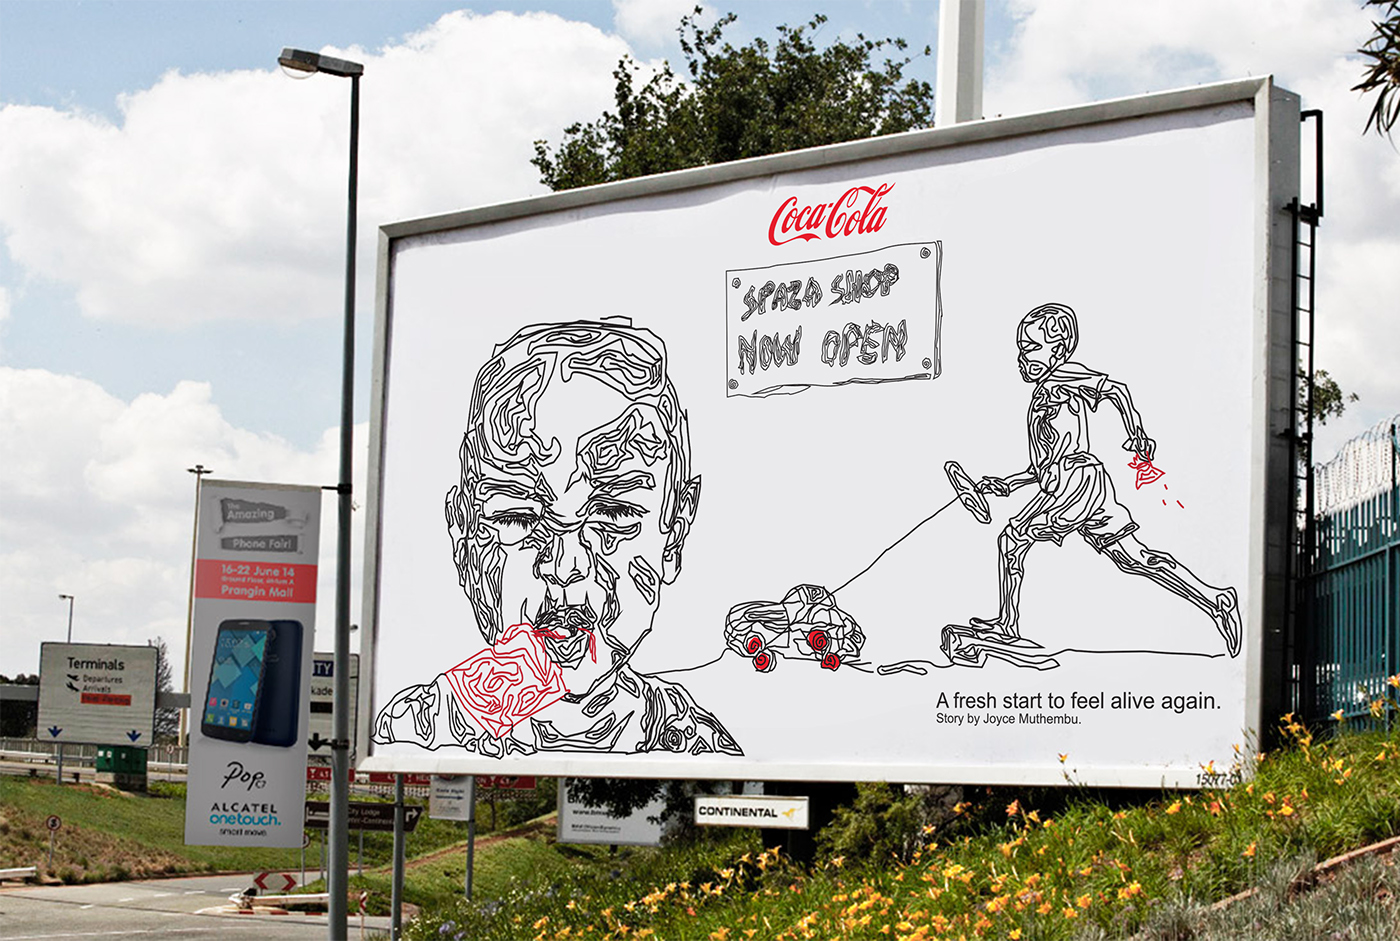 #Cocacola  #CocacolaArt art artdirecting design SothAfrica Township